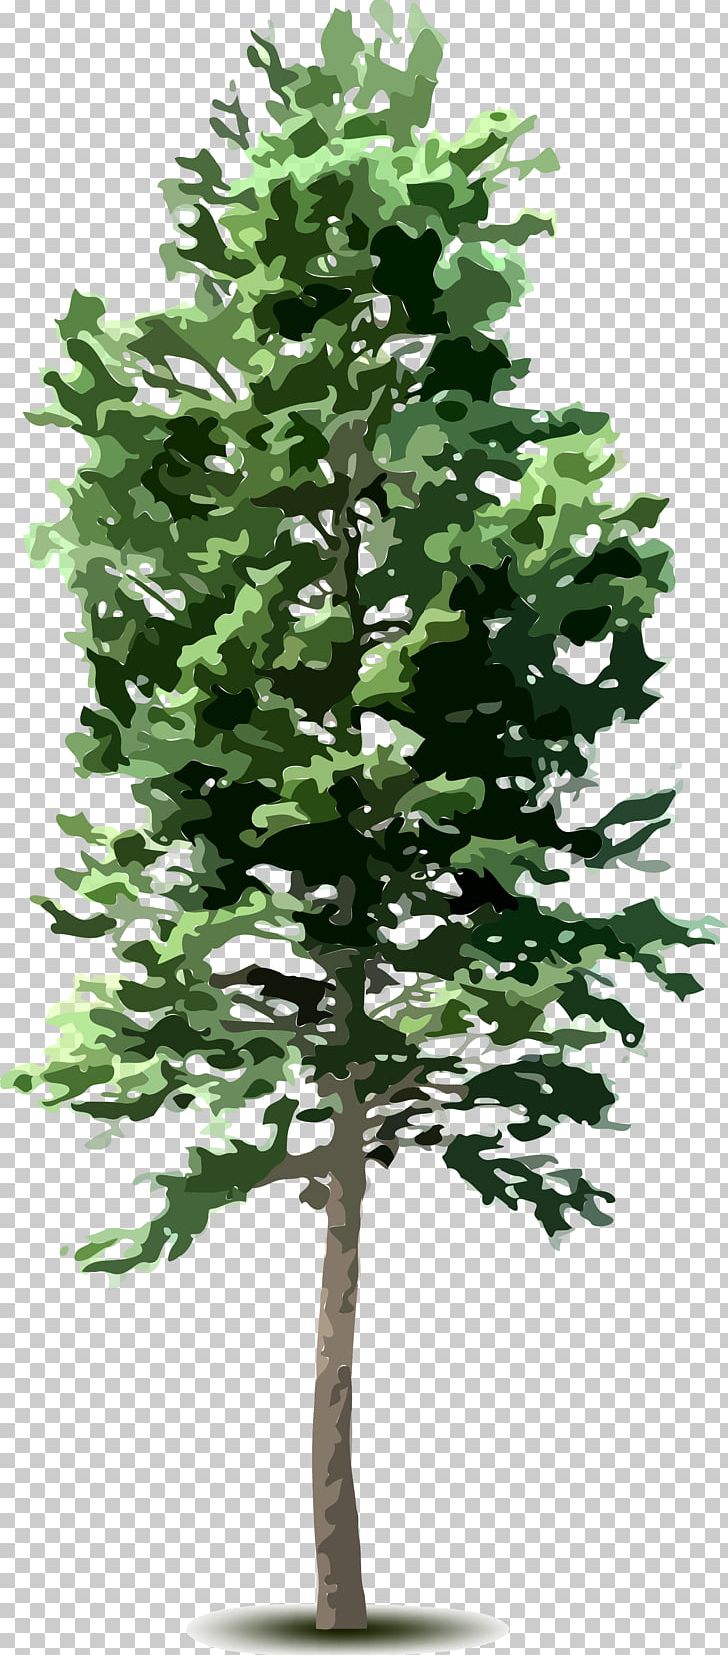 Tree Plant PNG, Clipart, Branch, Clip Art, Conifer, Conifers, Diagram Free PNG Download